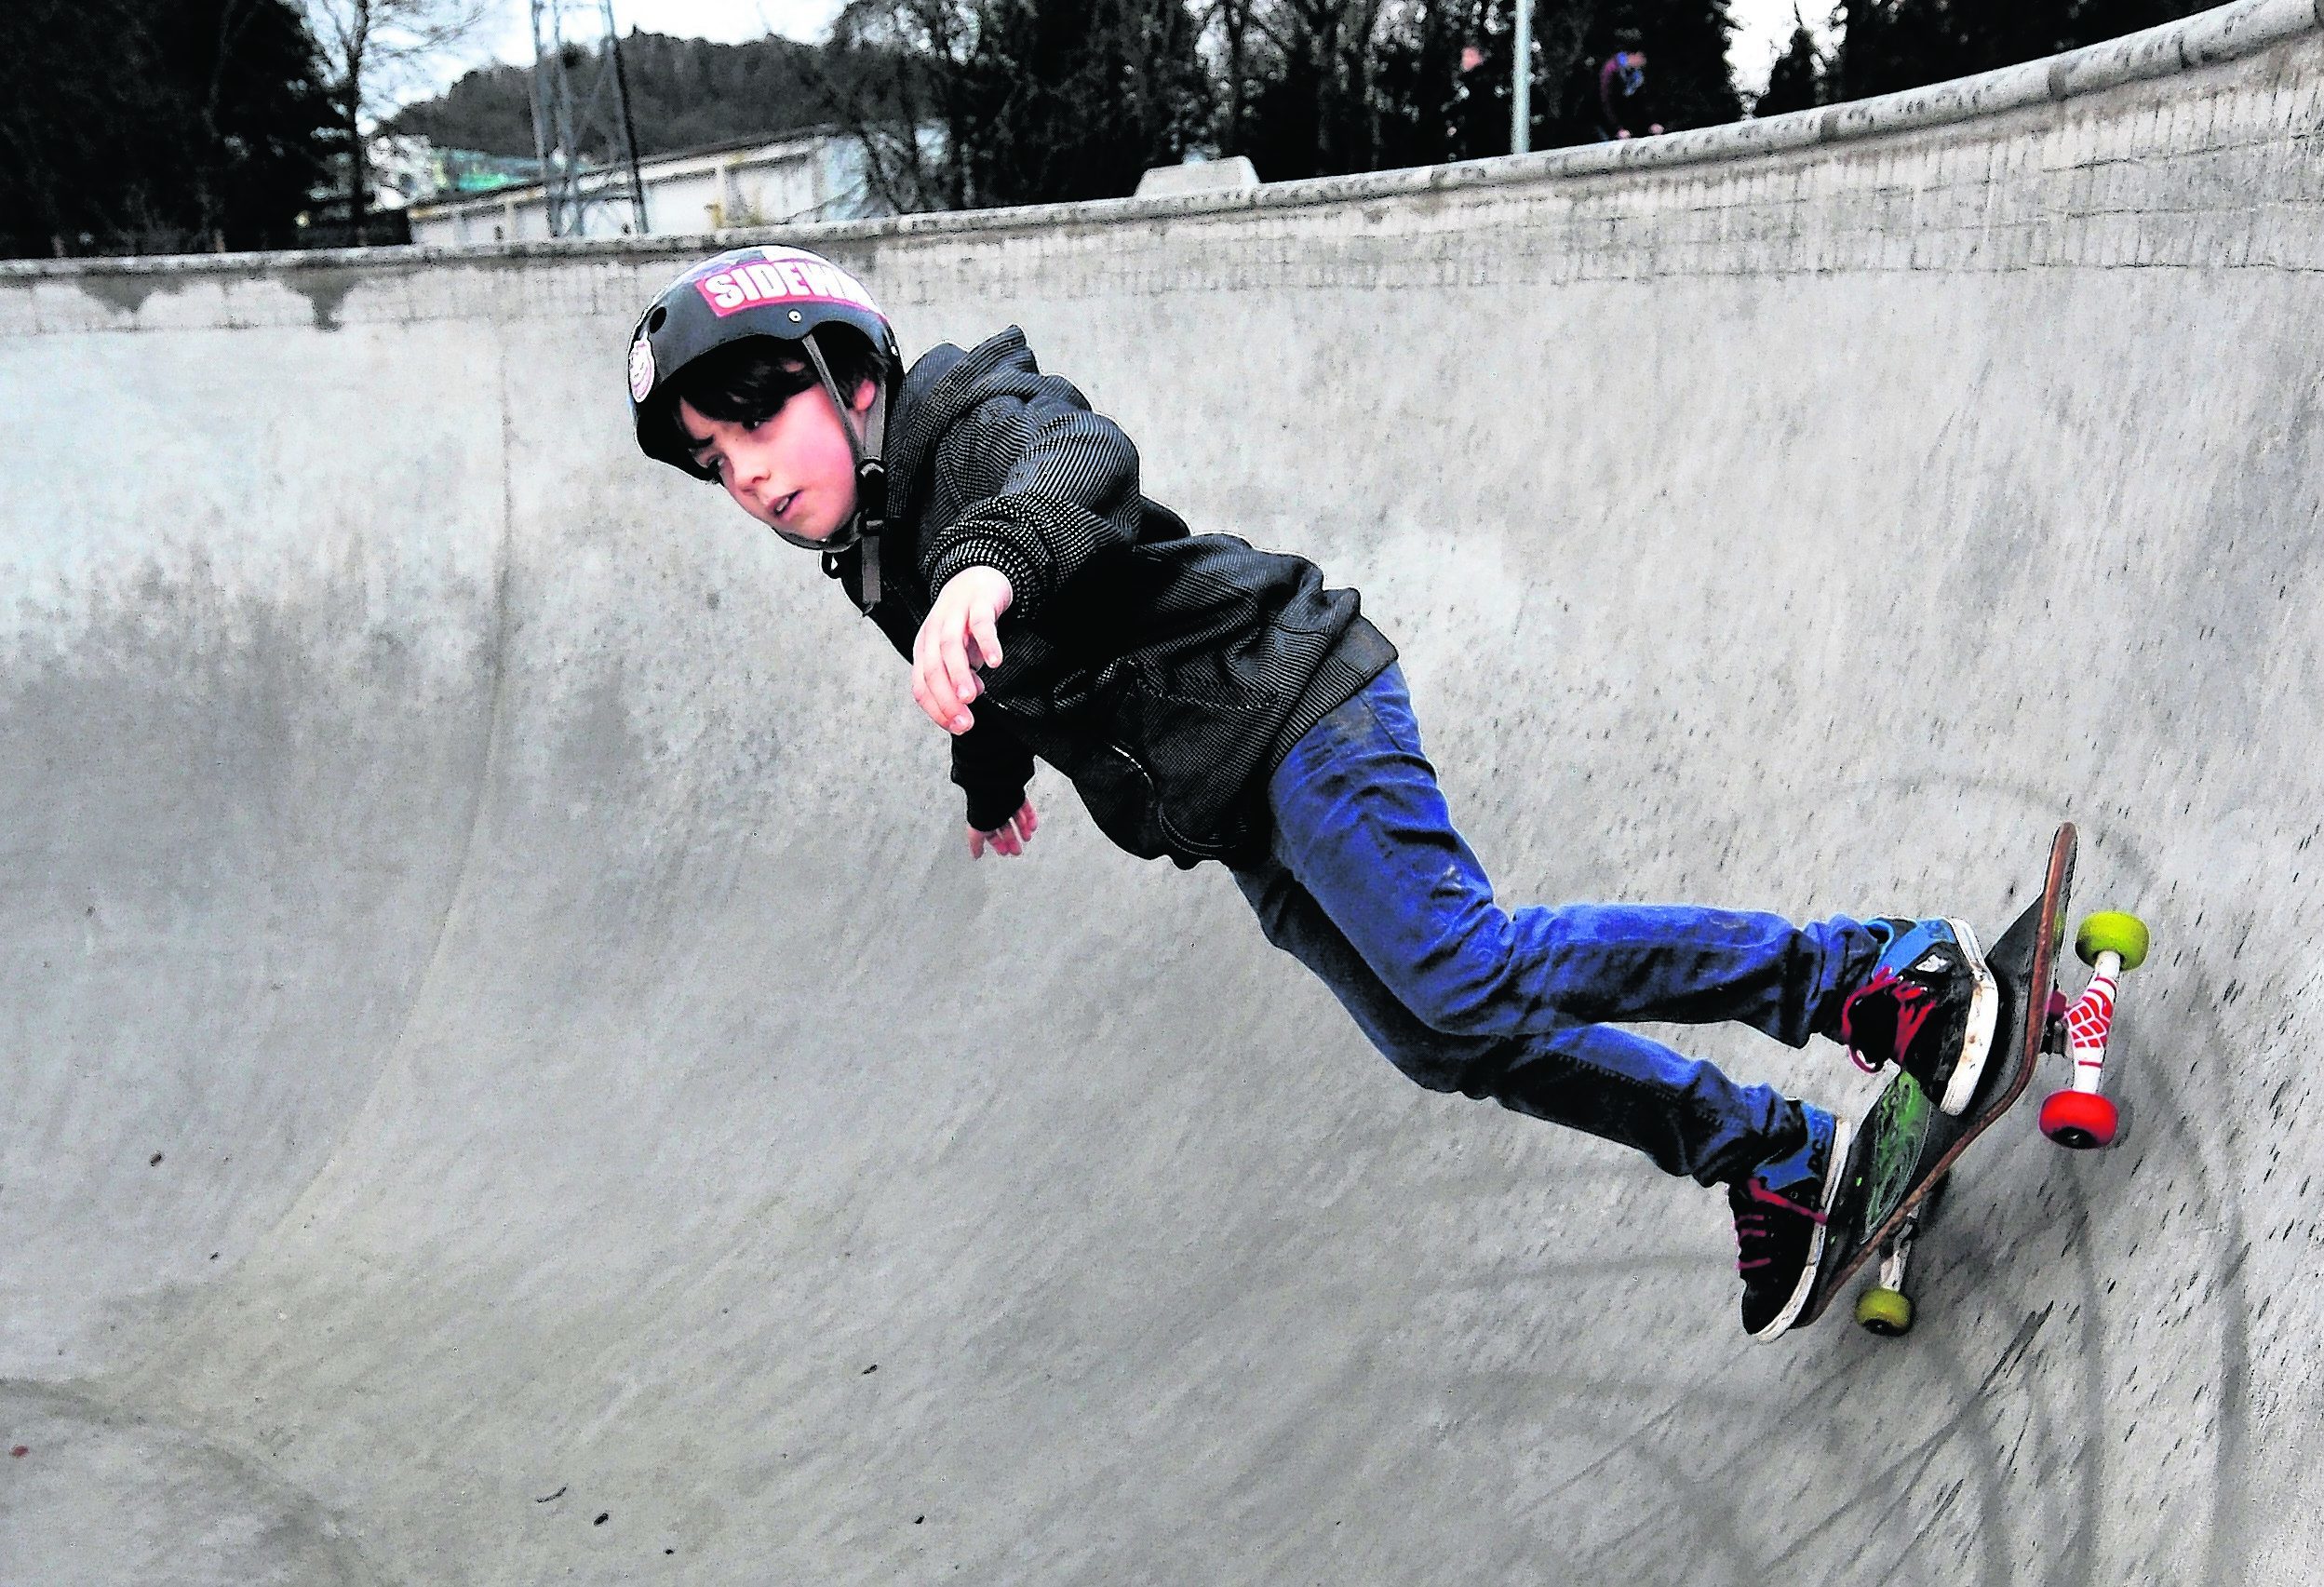 The Inverness Skate Park